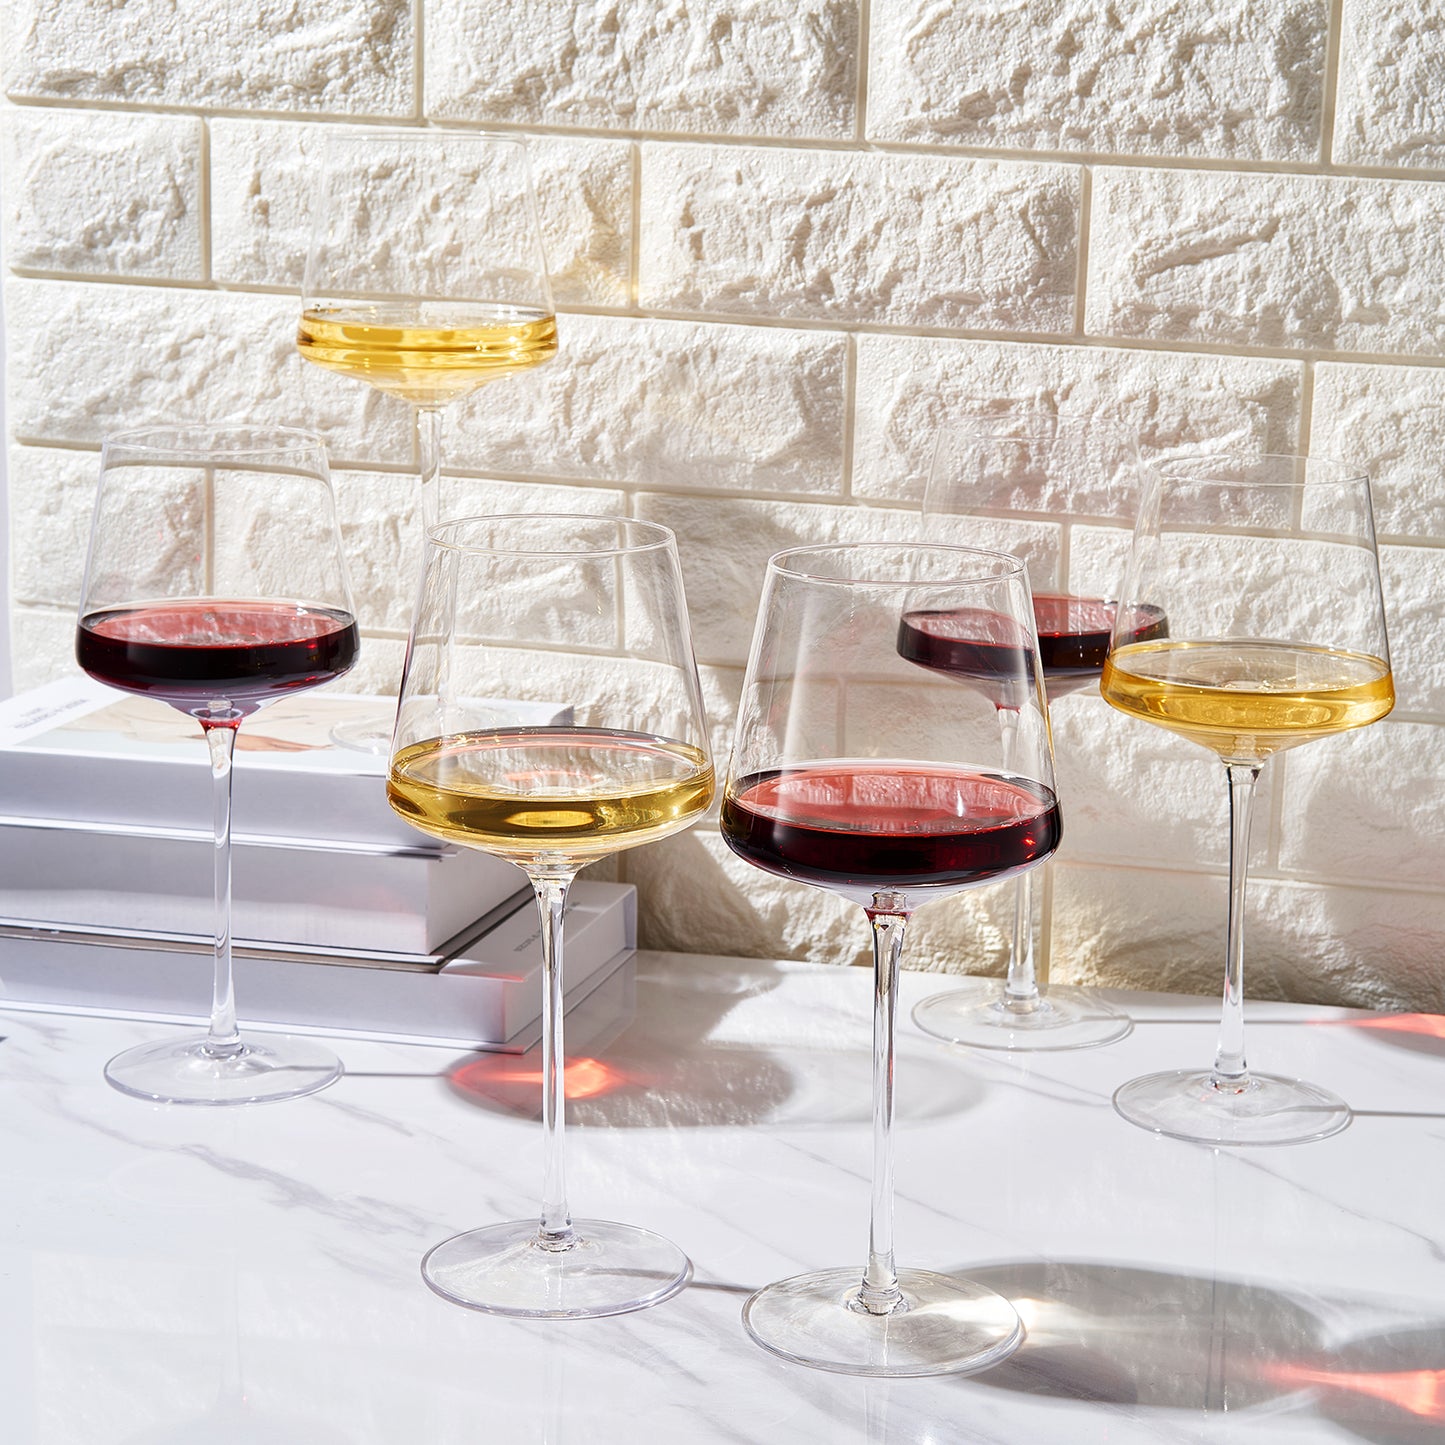 Classica Red Wine Glassware, Set of 6